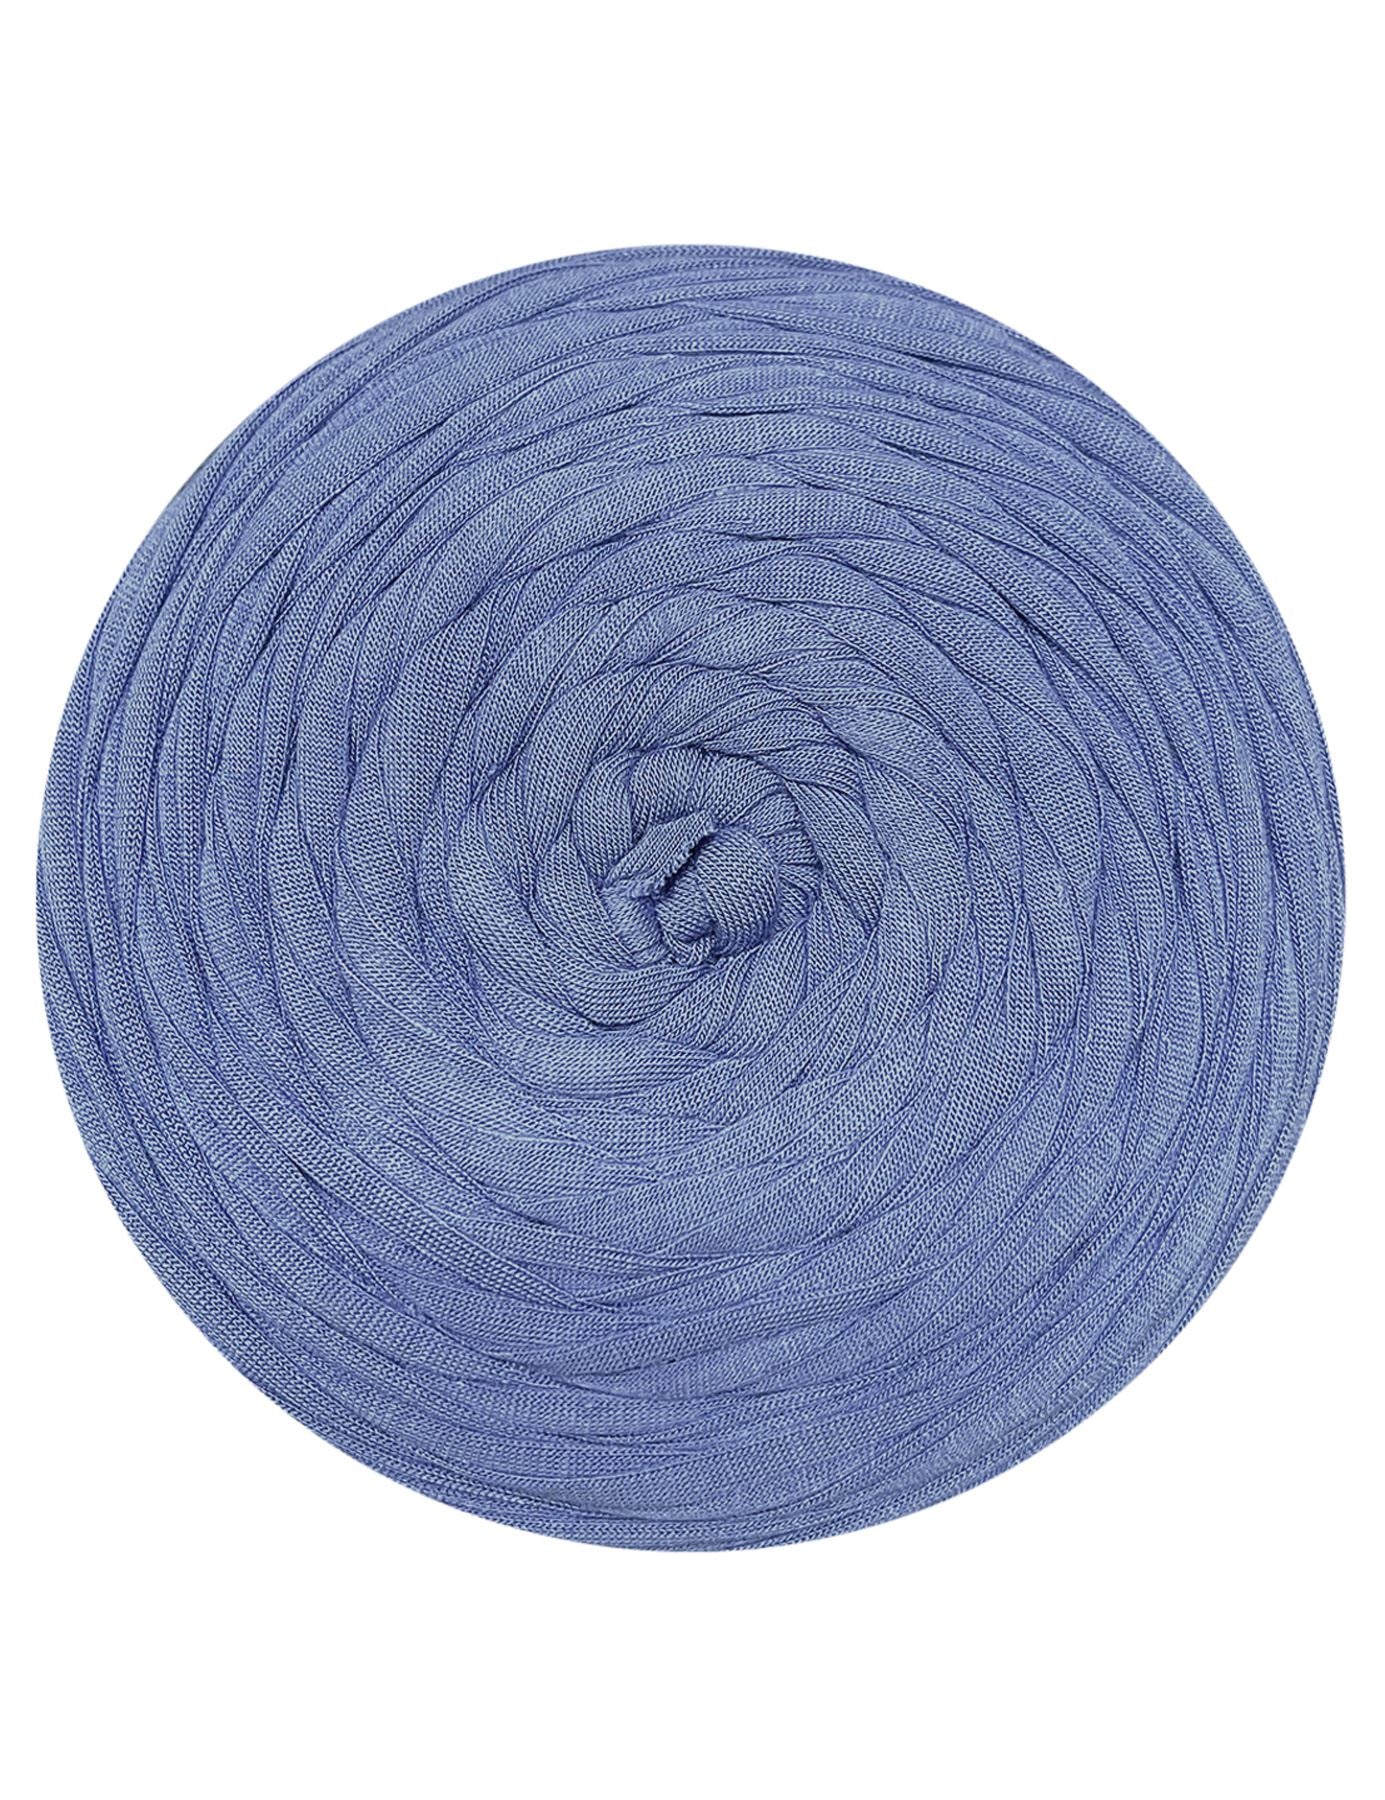 Stone blue t-shirt yarn (100-120m)